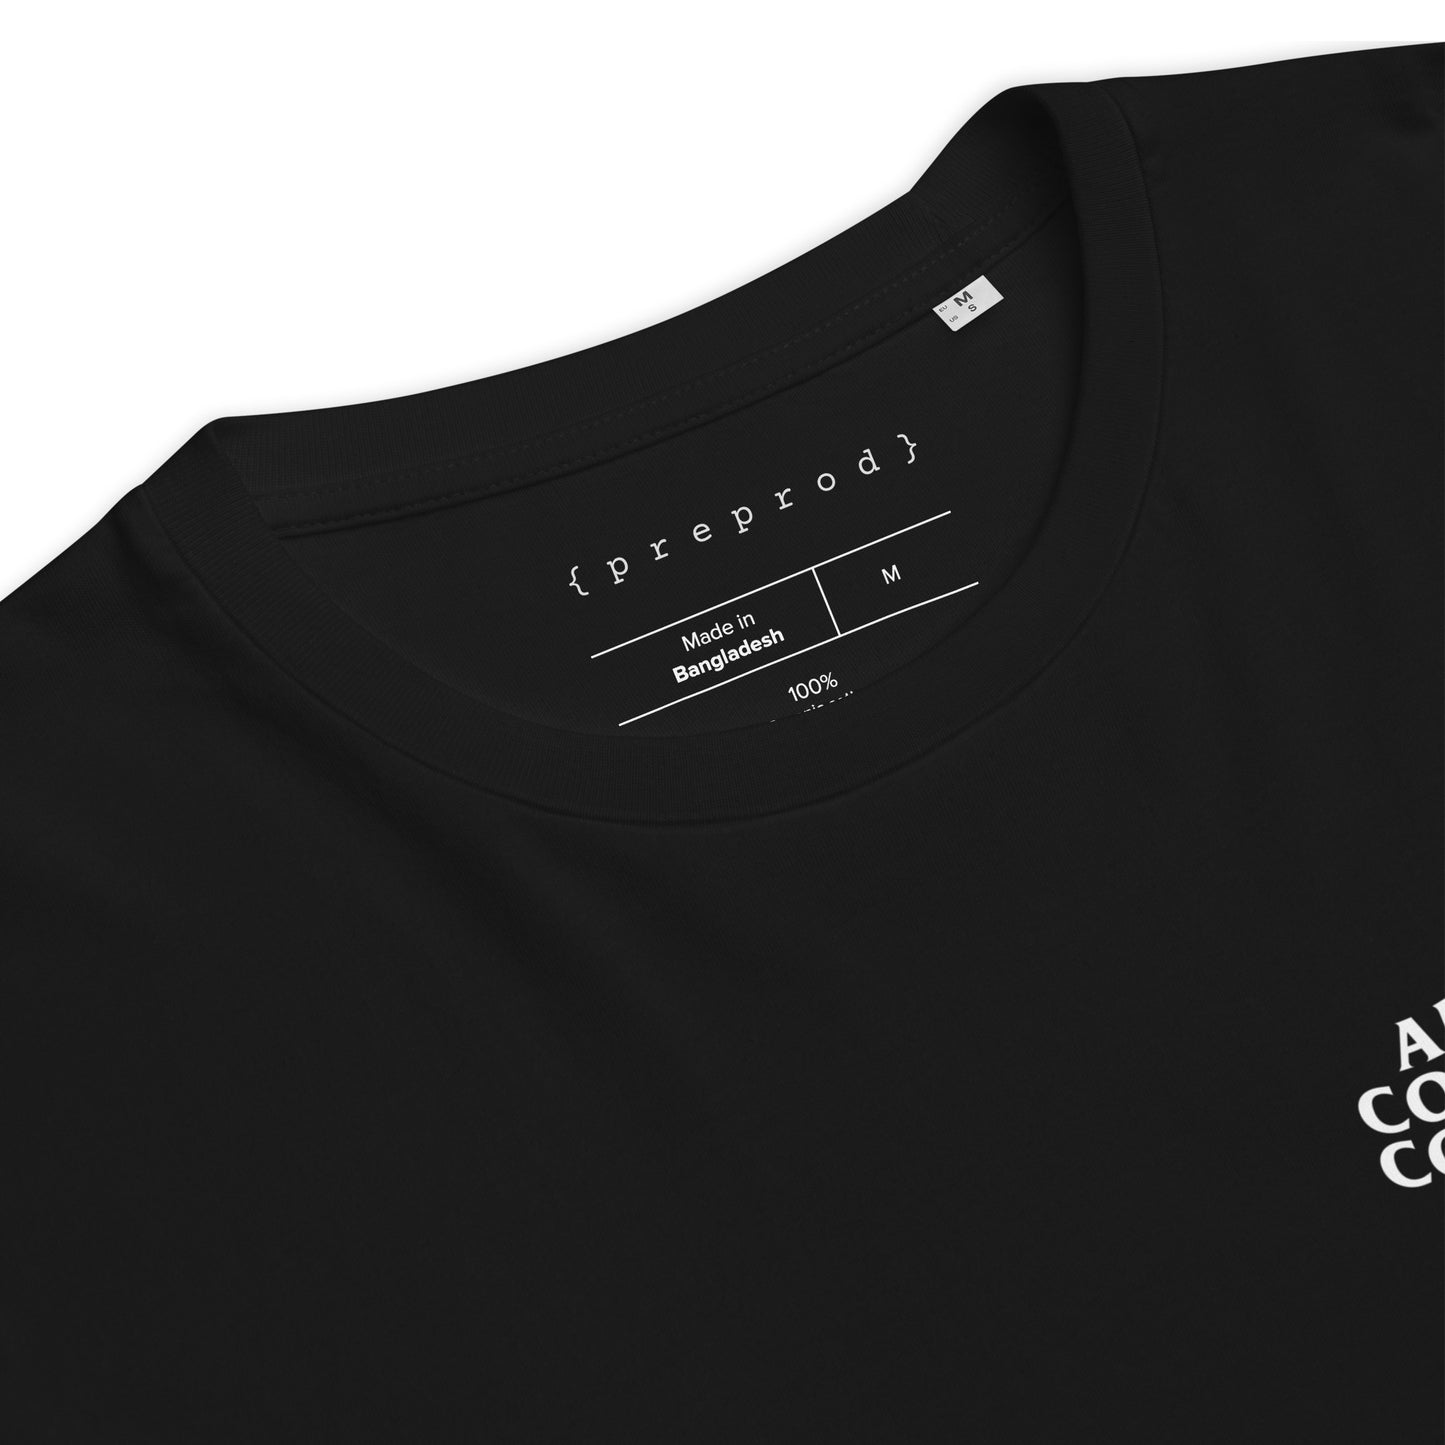 Anti Coding Coding Club - Camiseta 100% organica